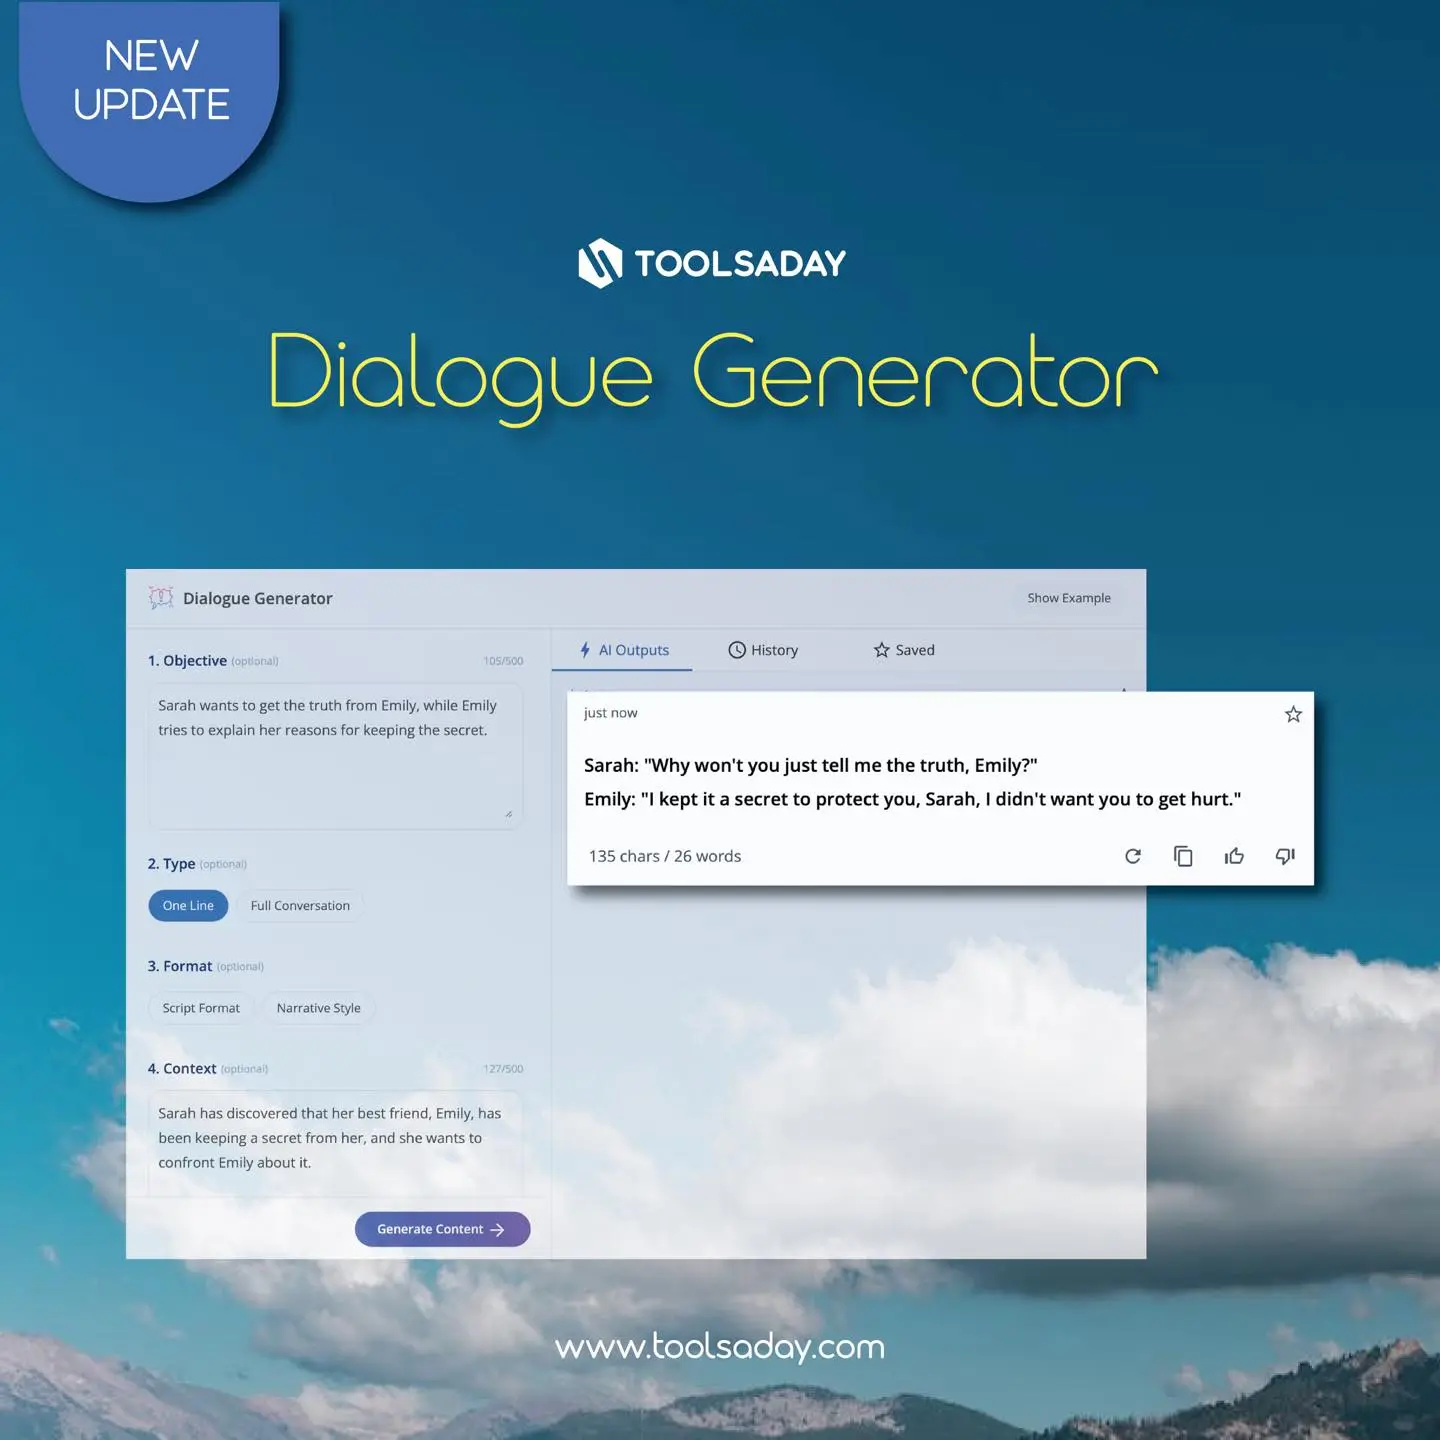 Poster for AI Dialogue Generator Tool